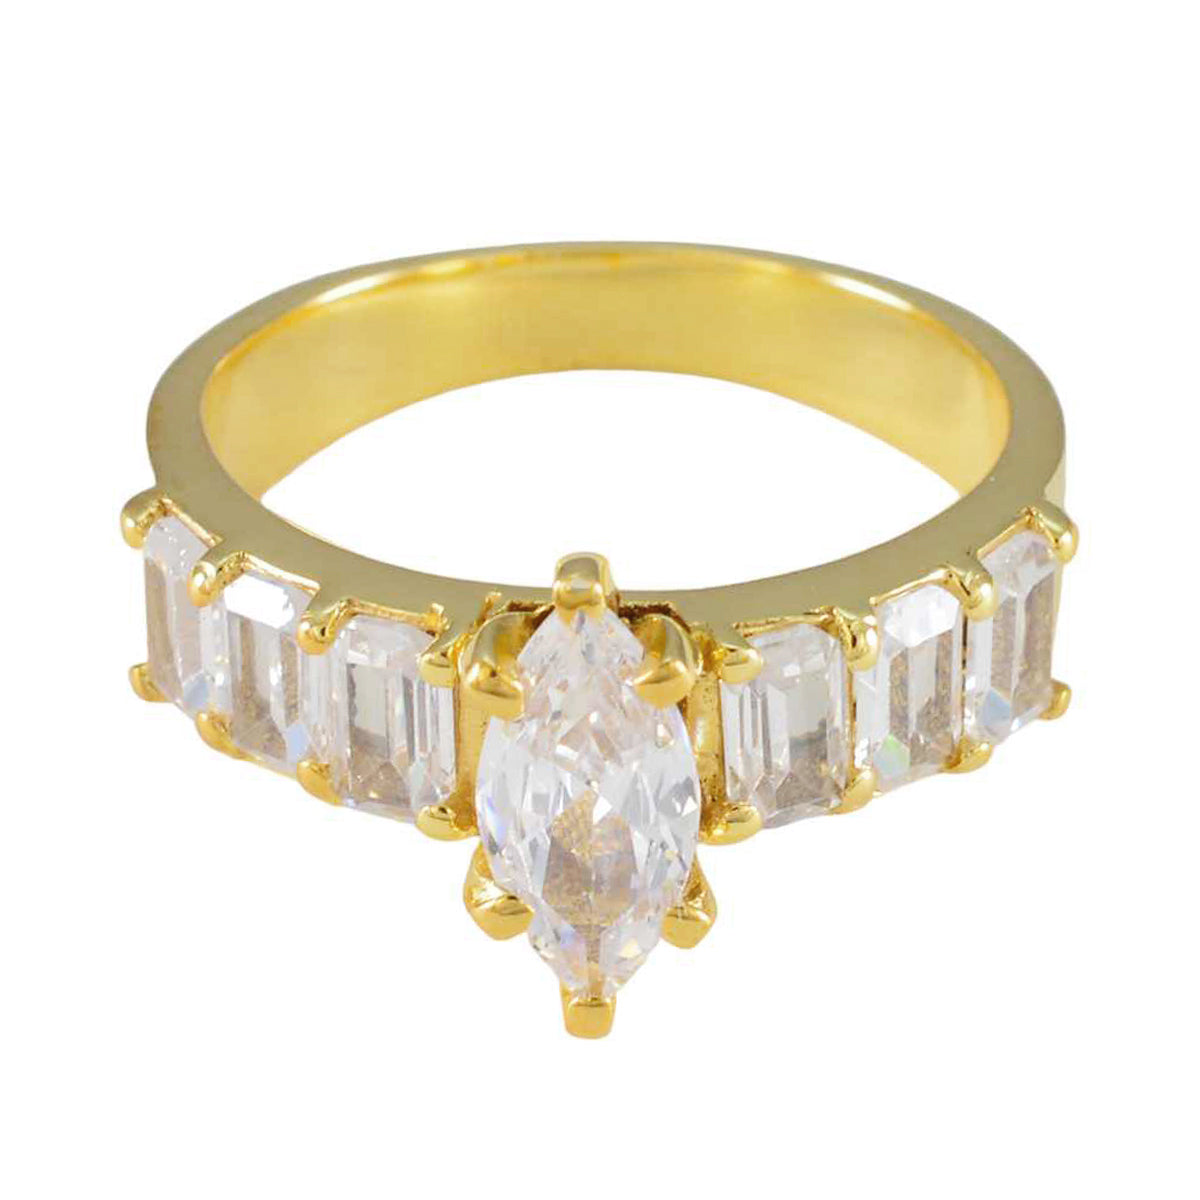 Riyo Manufacturer Silver Ring With Yellow Gold Plating White CZ Stone Multi Shape Prong Setting Ring